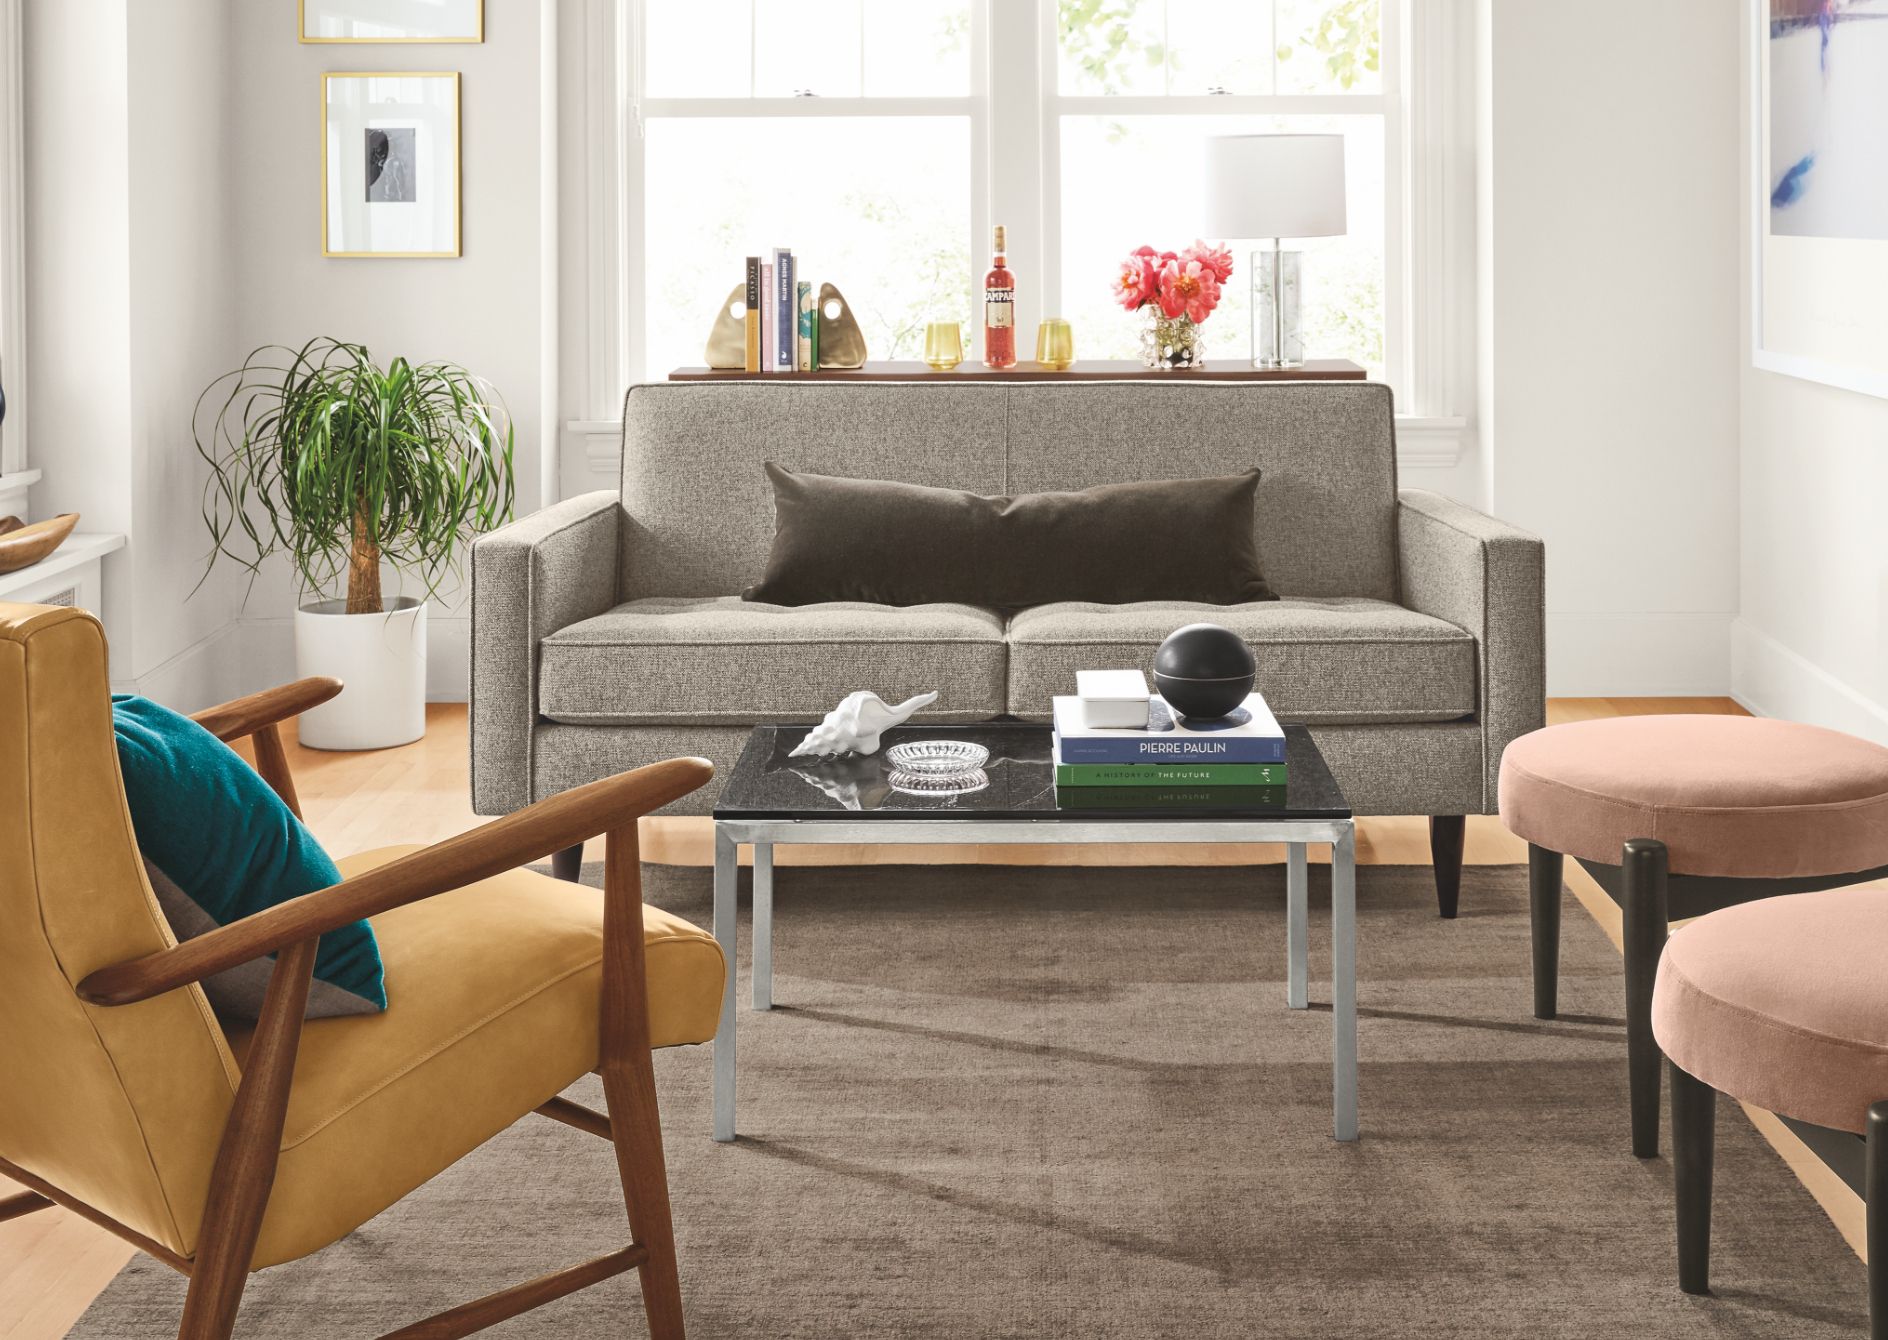 Sofa Ideas For A Small Living Room